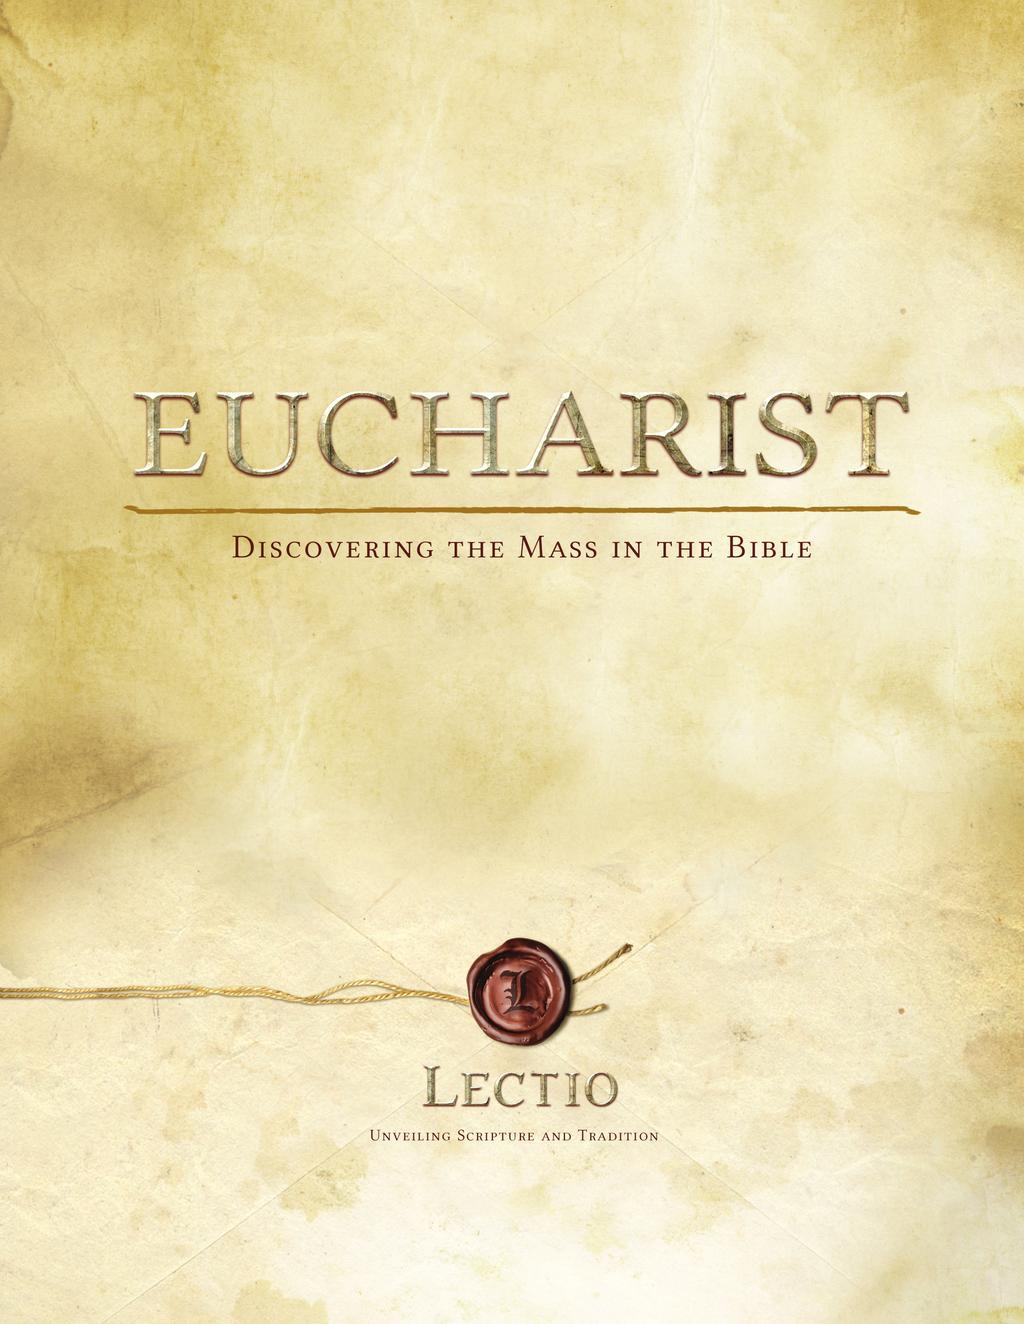 LECTIO: EUCHARIST FOR DISCIPLESHIP